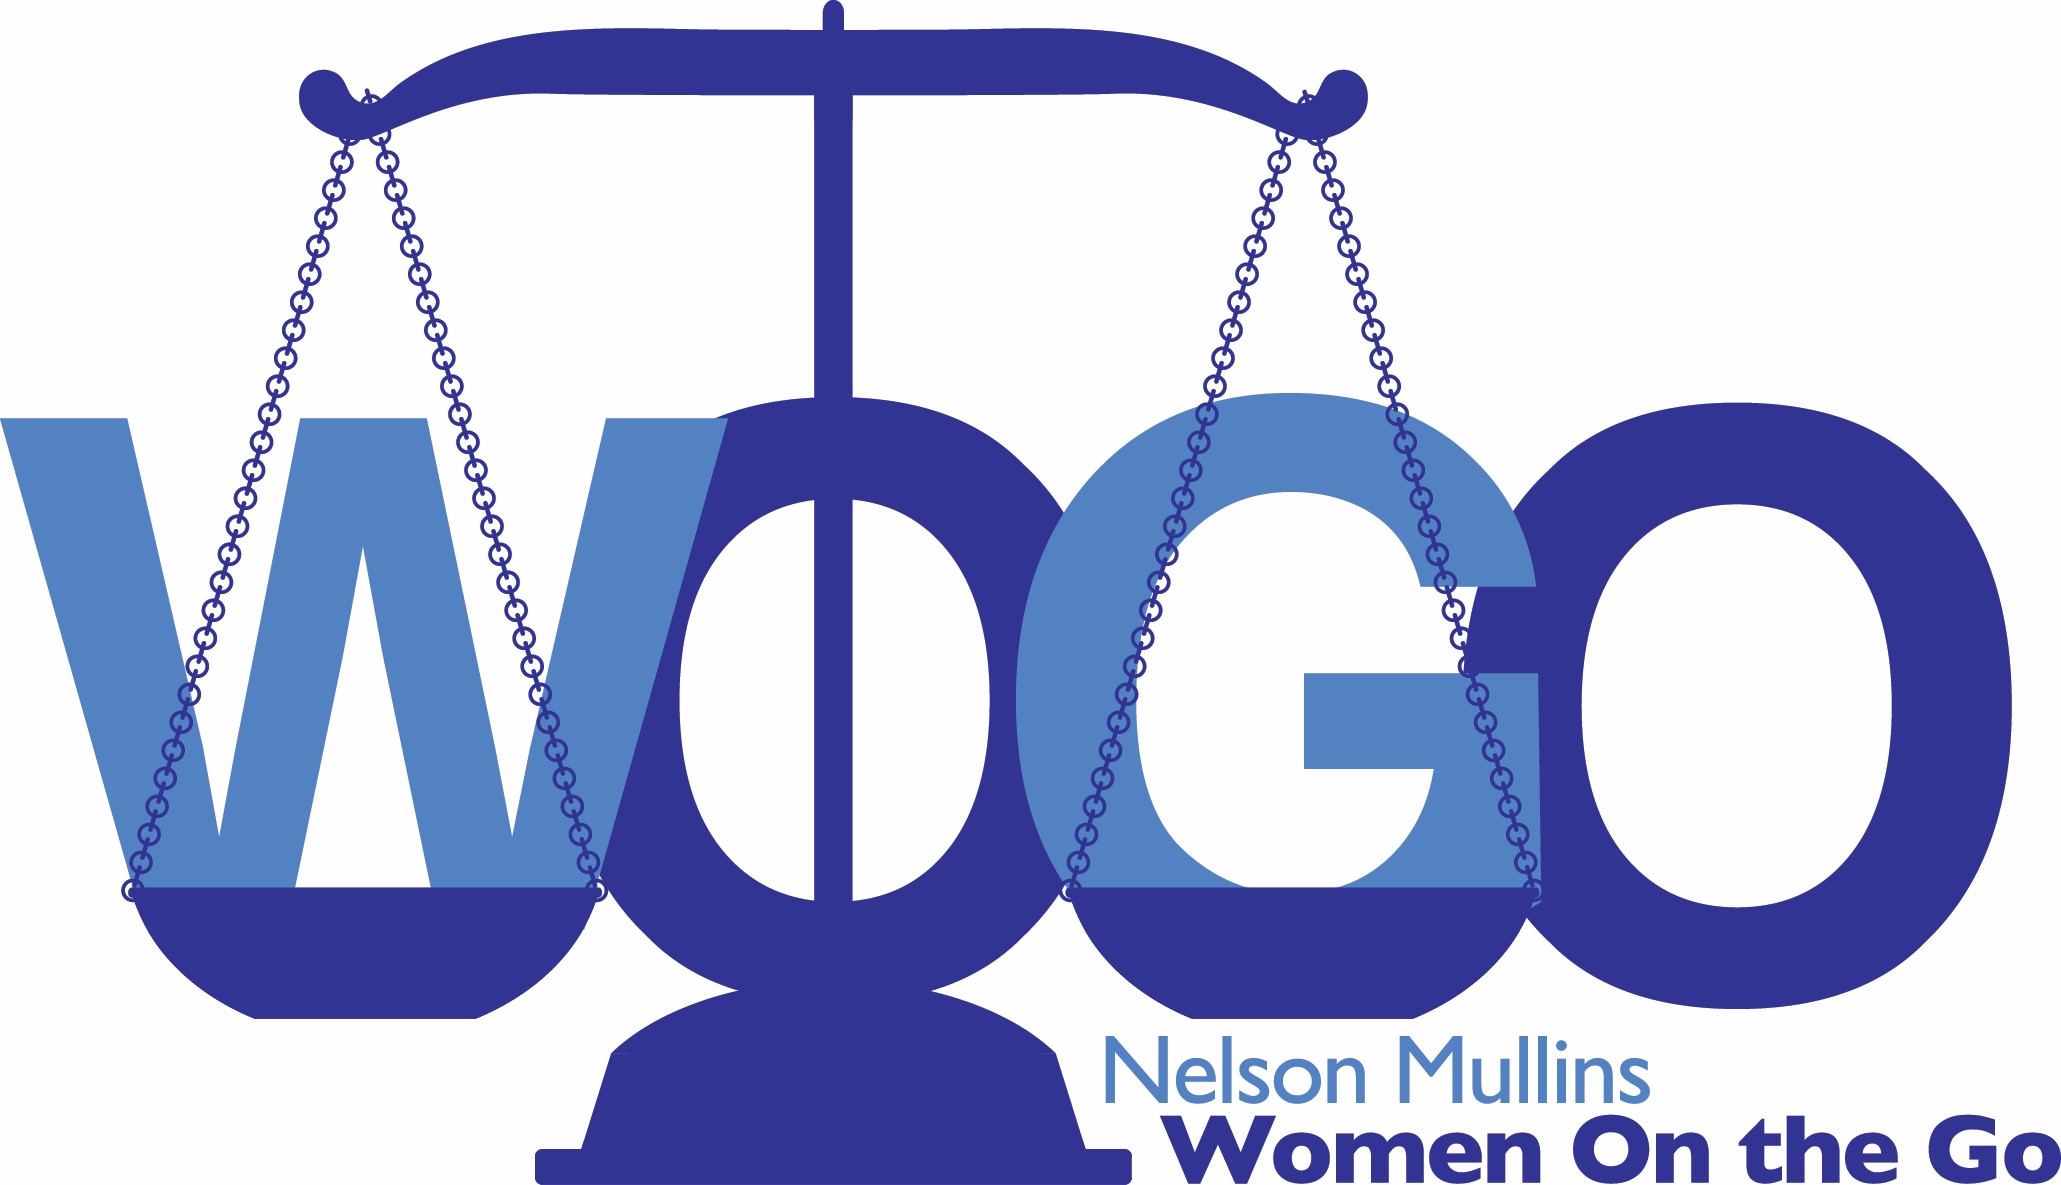 WOGO Nelson Mullins (Women on the Go)